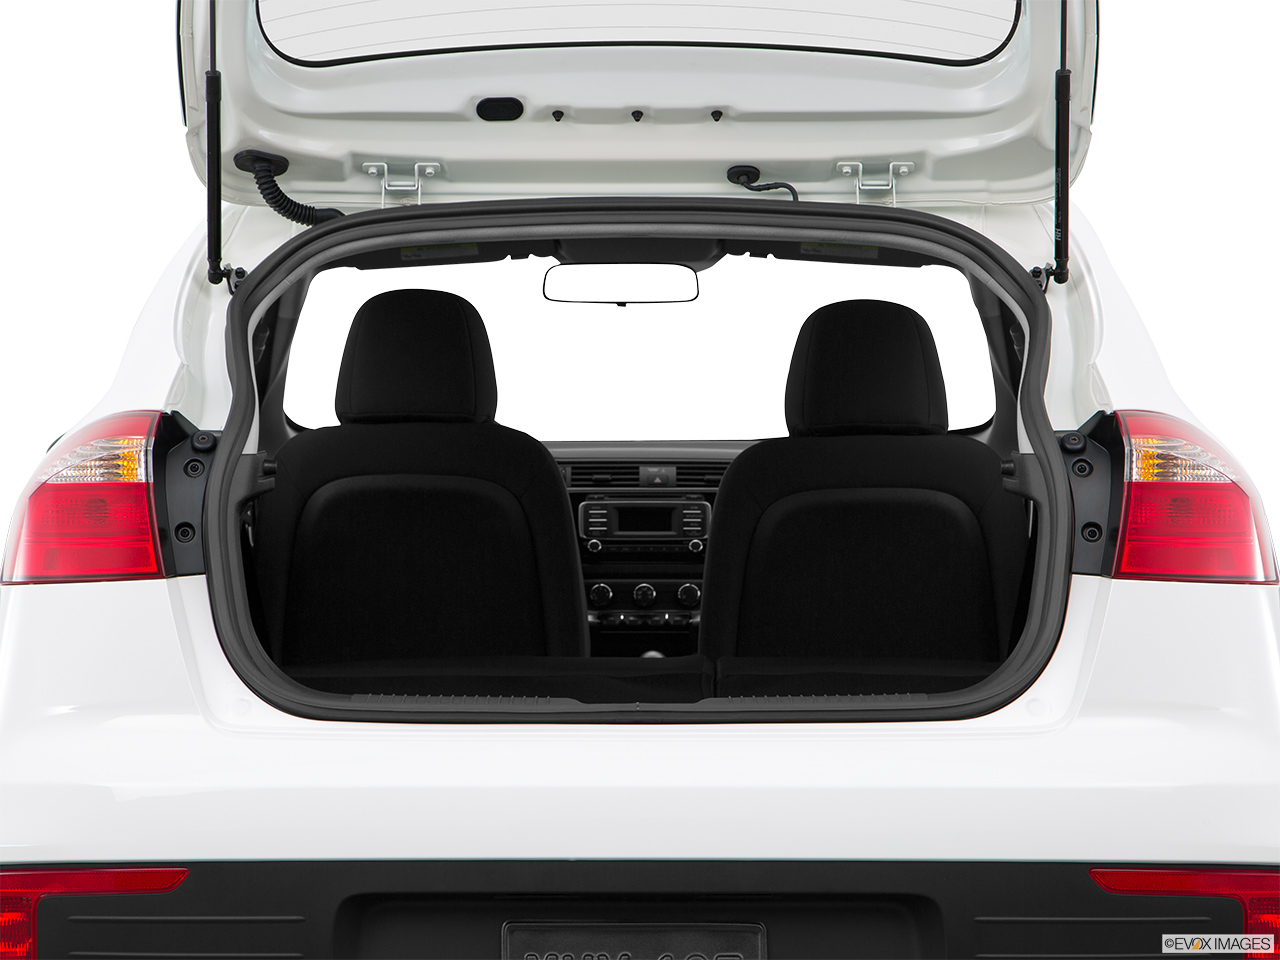 2016 Kia Rio 5-door LX Hatchback & SUV rear angle. 